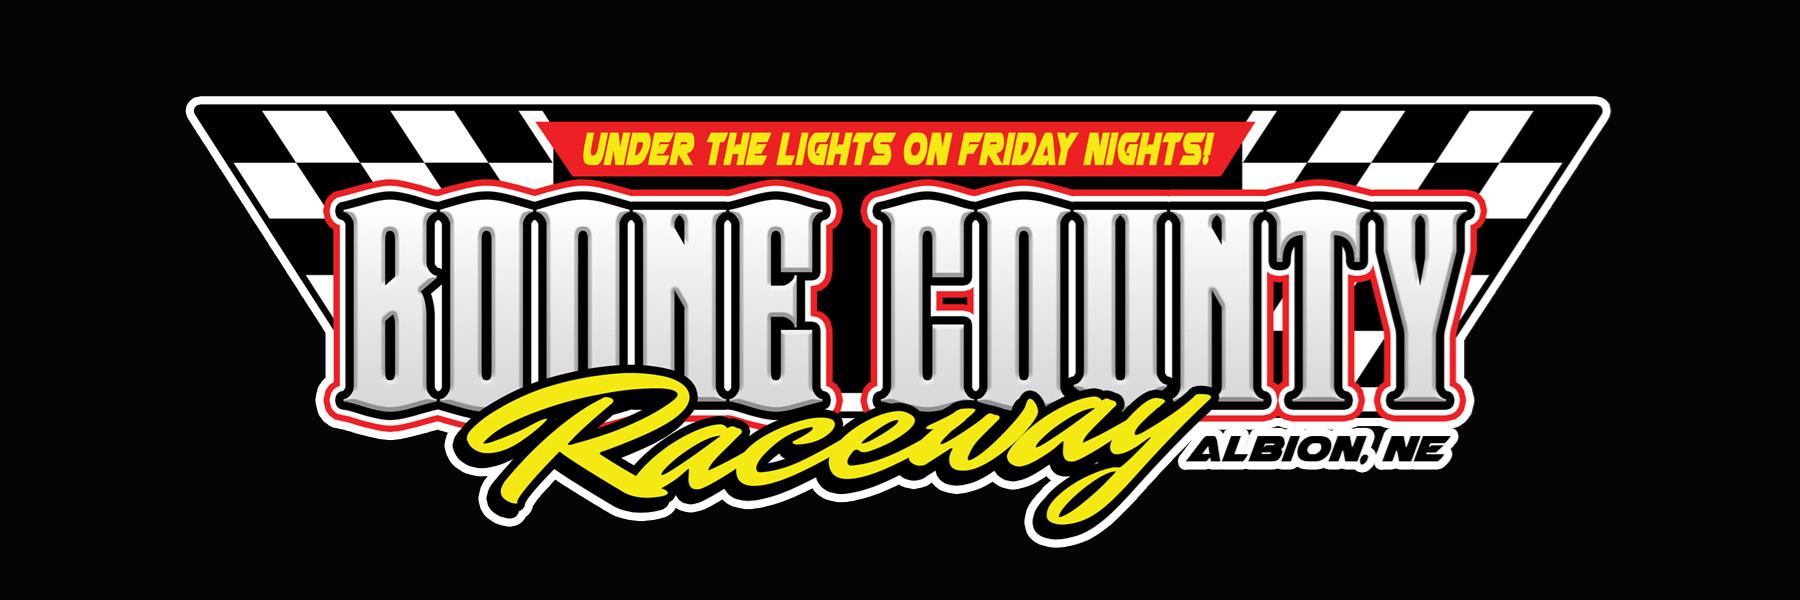 7/11/2021 - Boone County Raceway